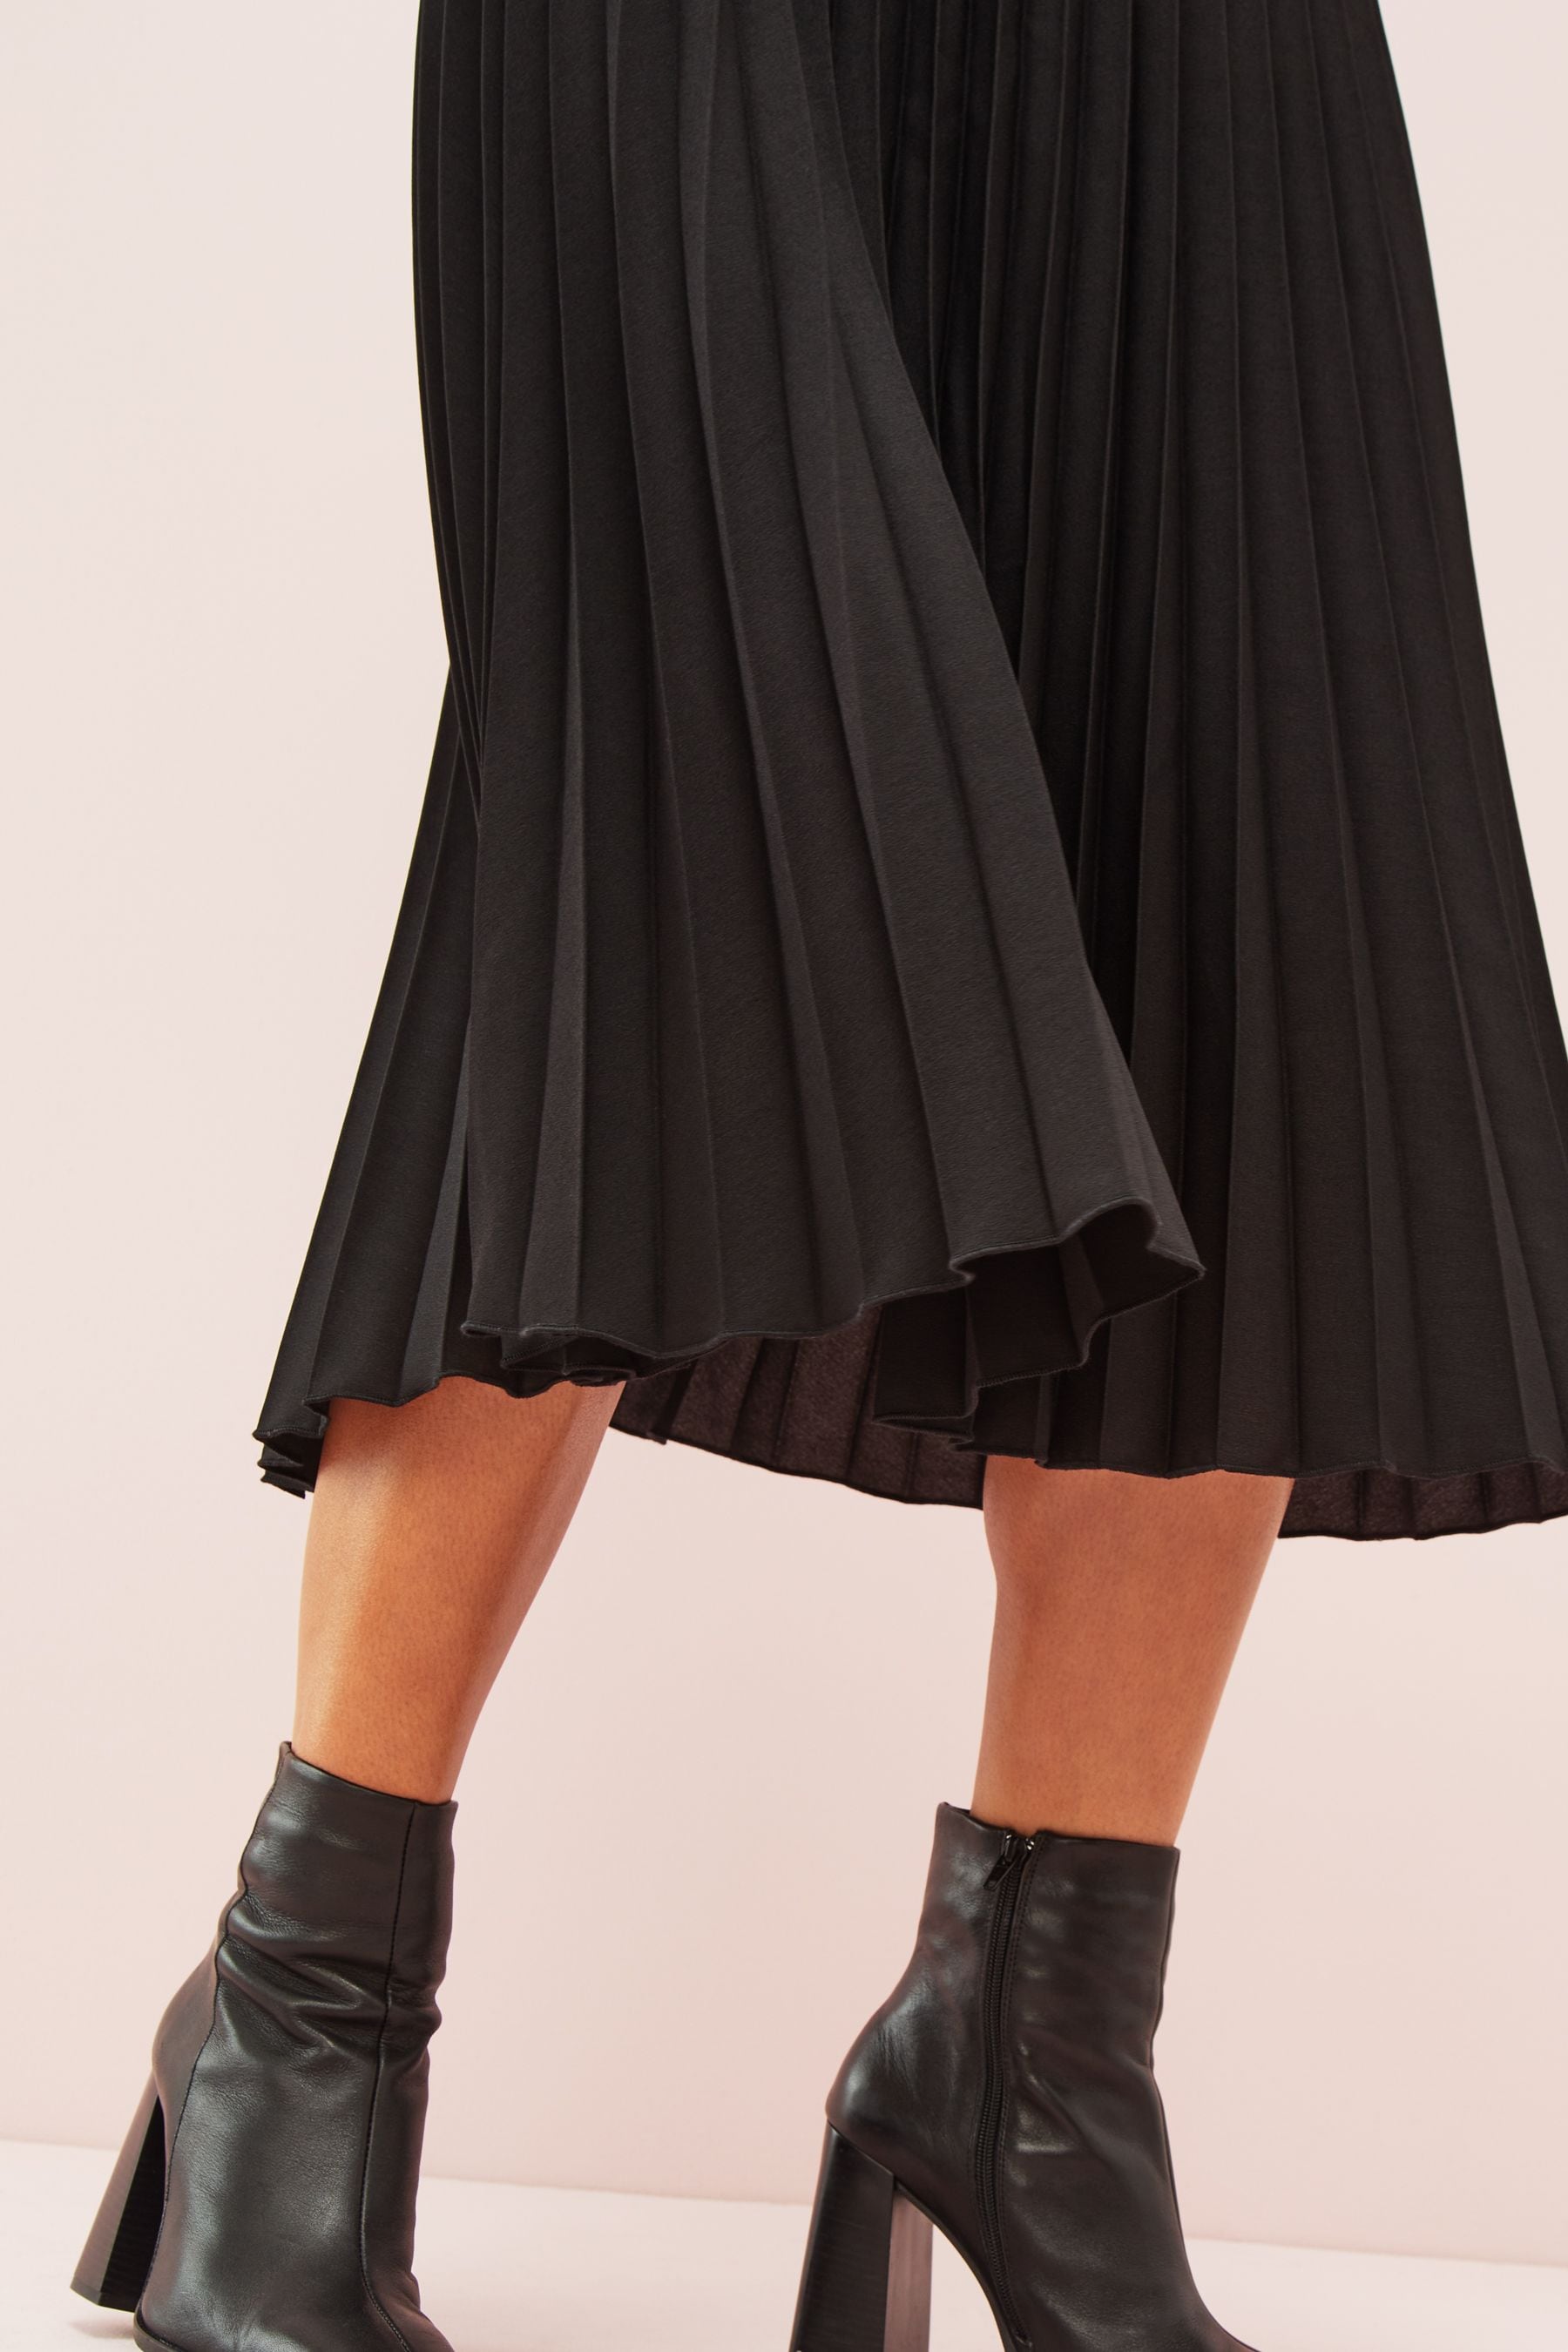 Buy Friends Like These Black Pleat Summer Midi Skirt from Next Ireland